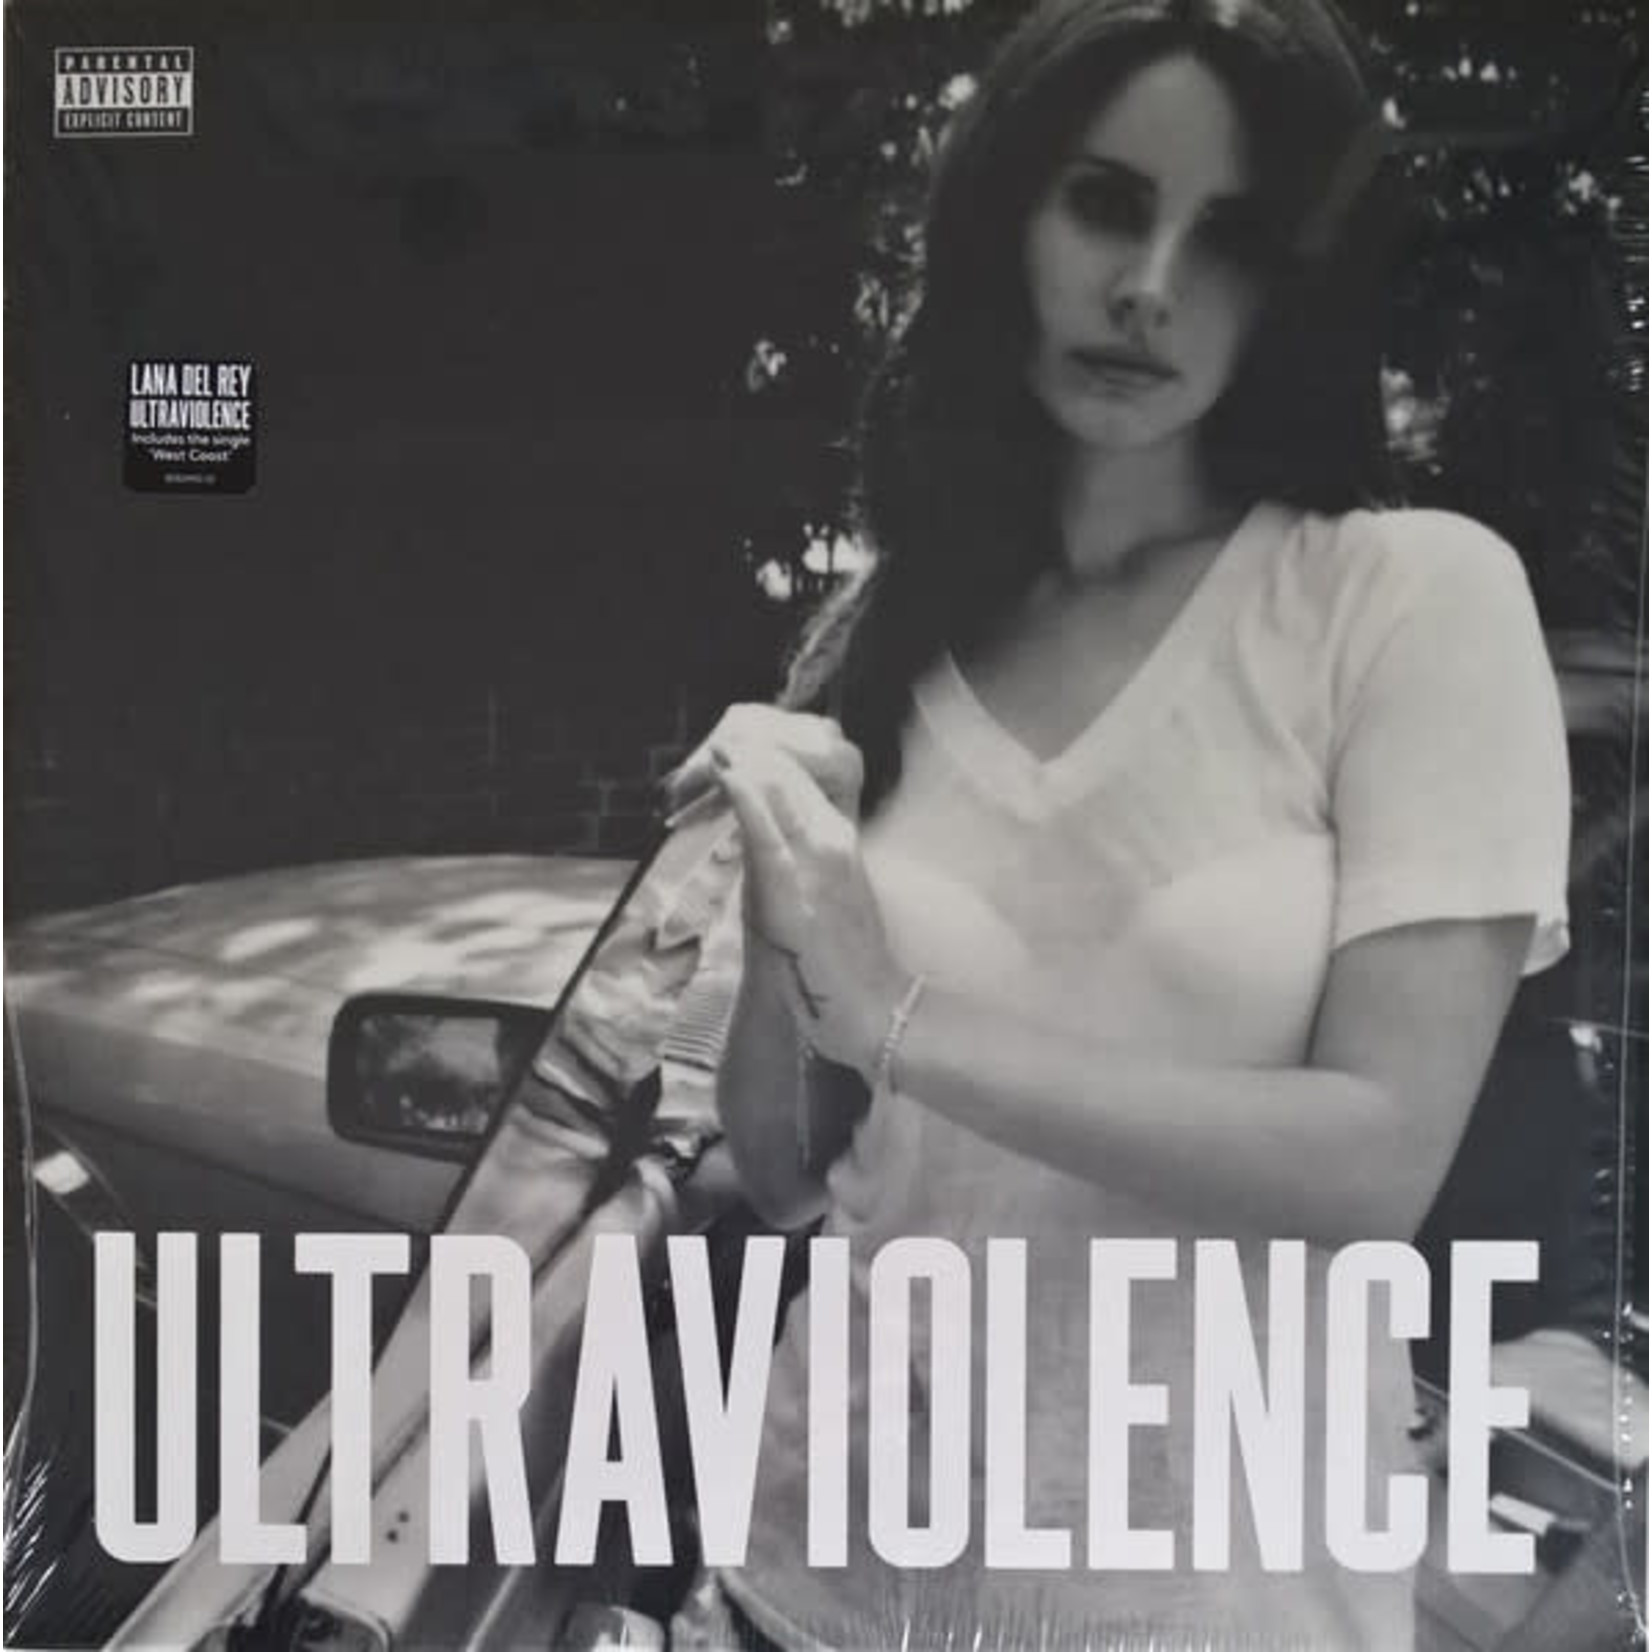 Interscope Lana Del Rey - Ultraviolence (2LP)